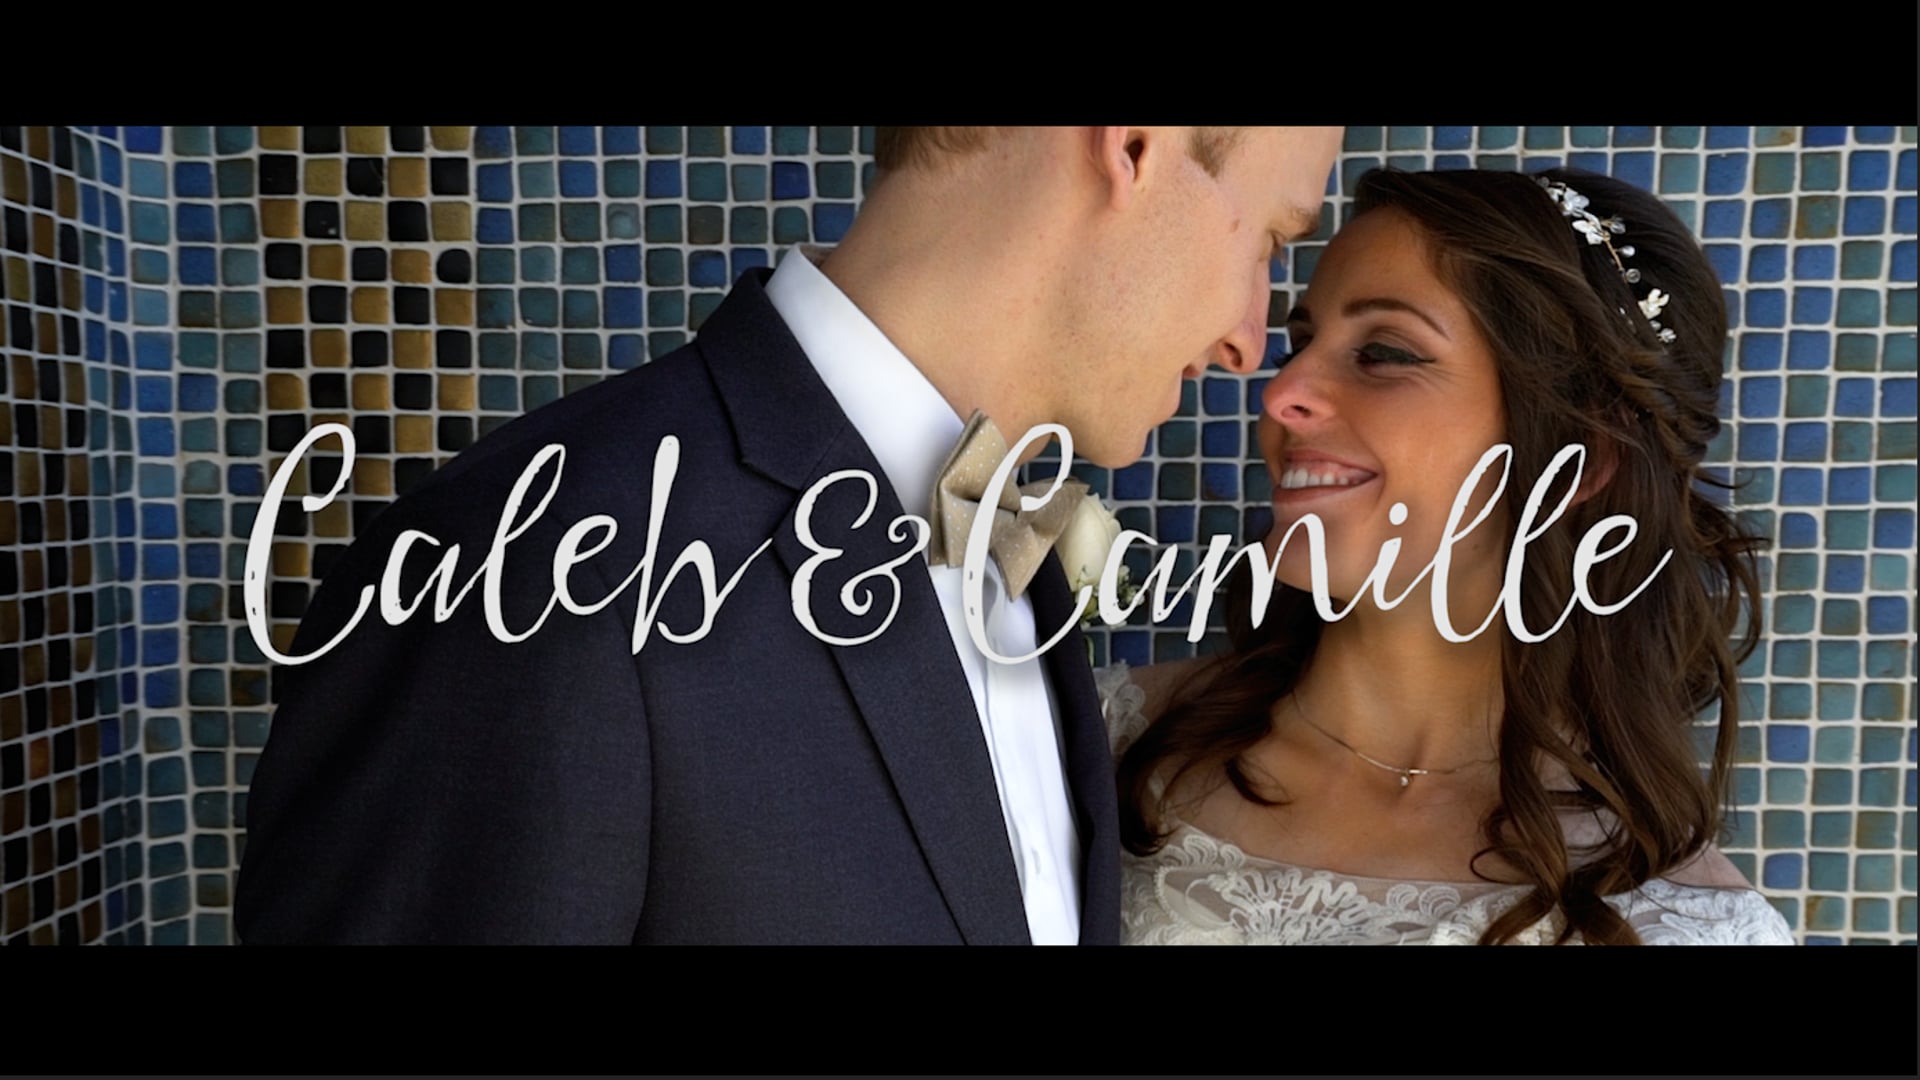 Caleb & Camille Wedding Video